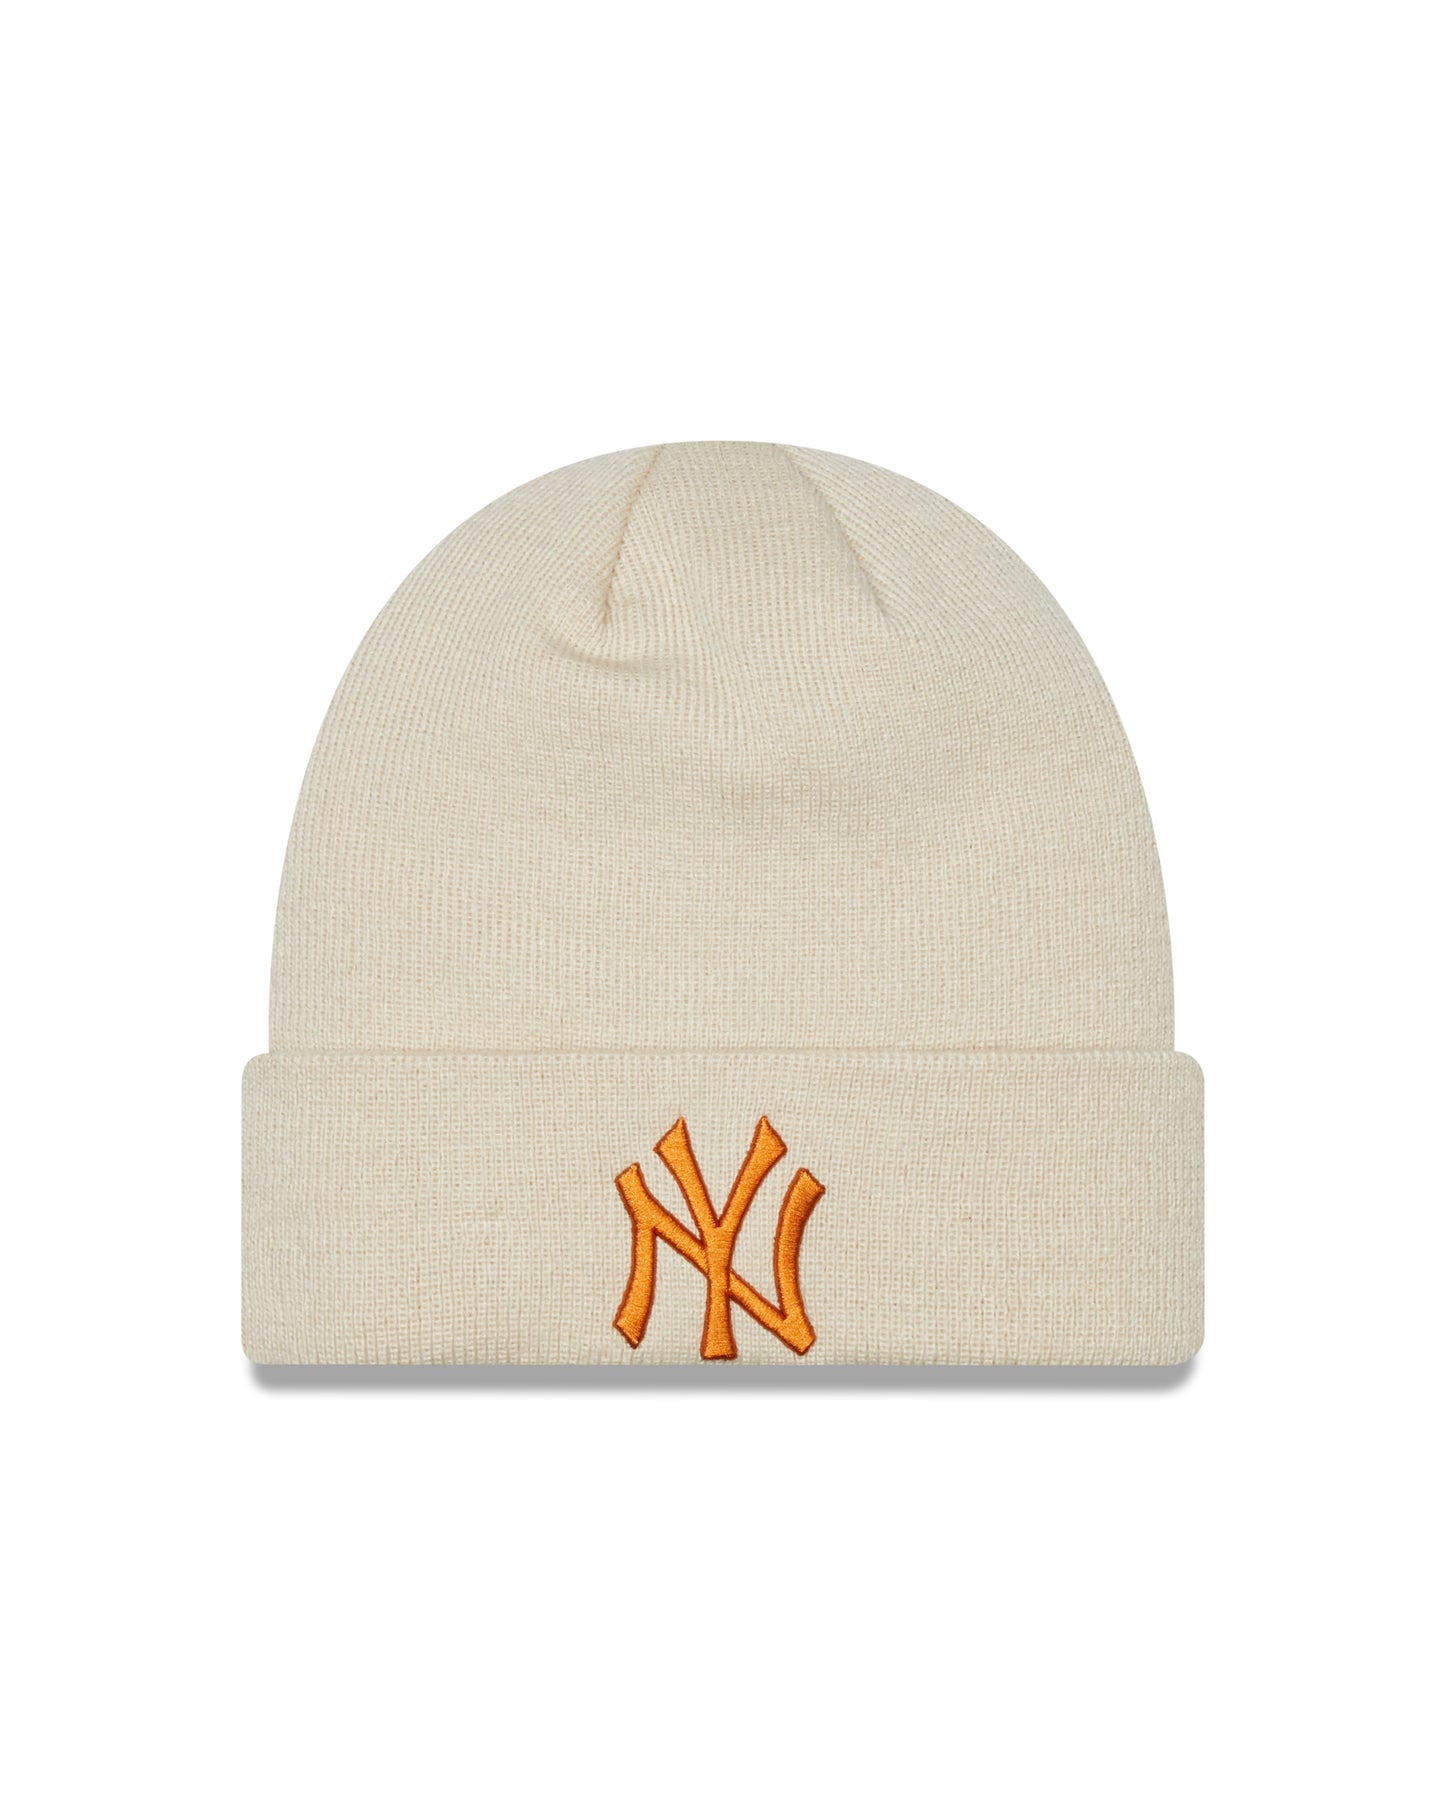 League Essentials Cuff Beanie New York Yankees - Stone/Rust - Headz Up 